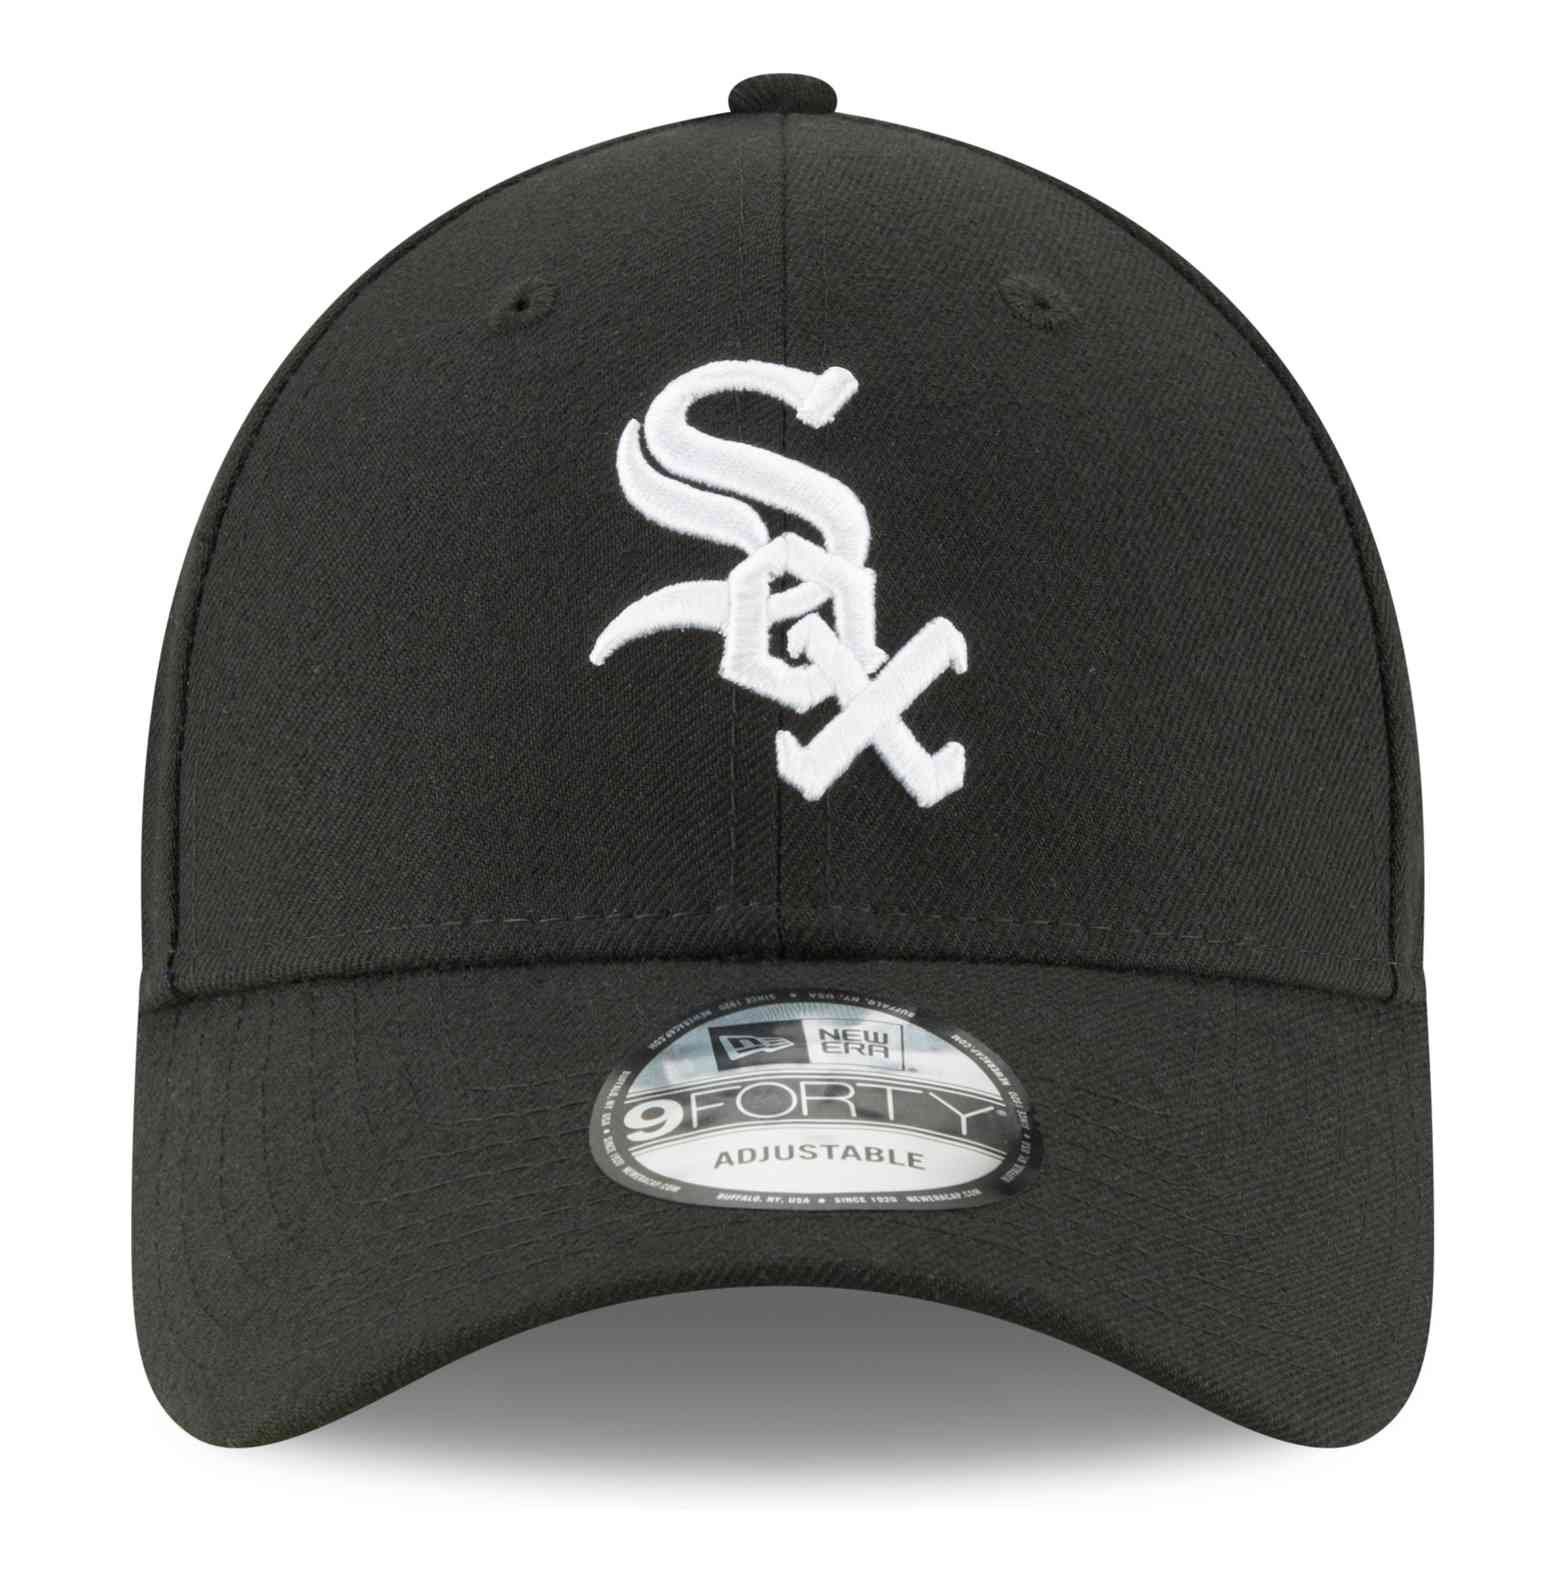 New League Sox Era 9Forty The White Cap Snapback MLB Chicago